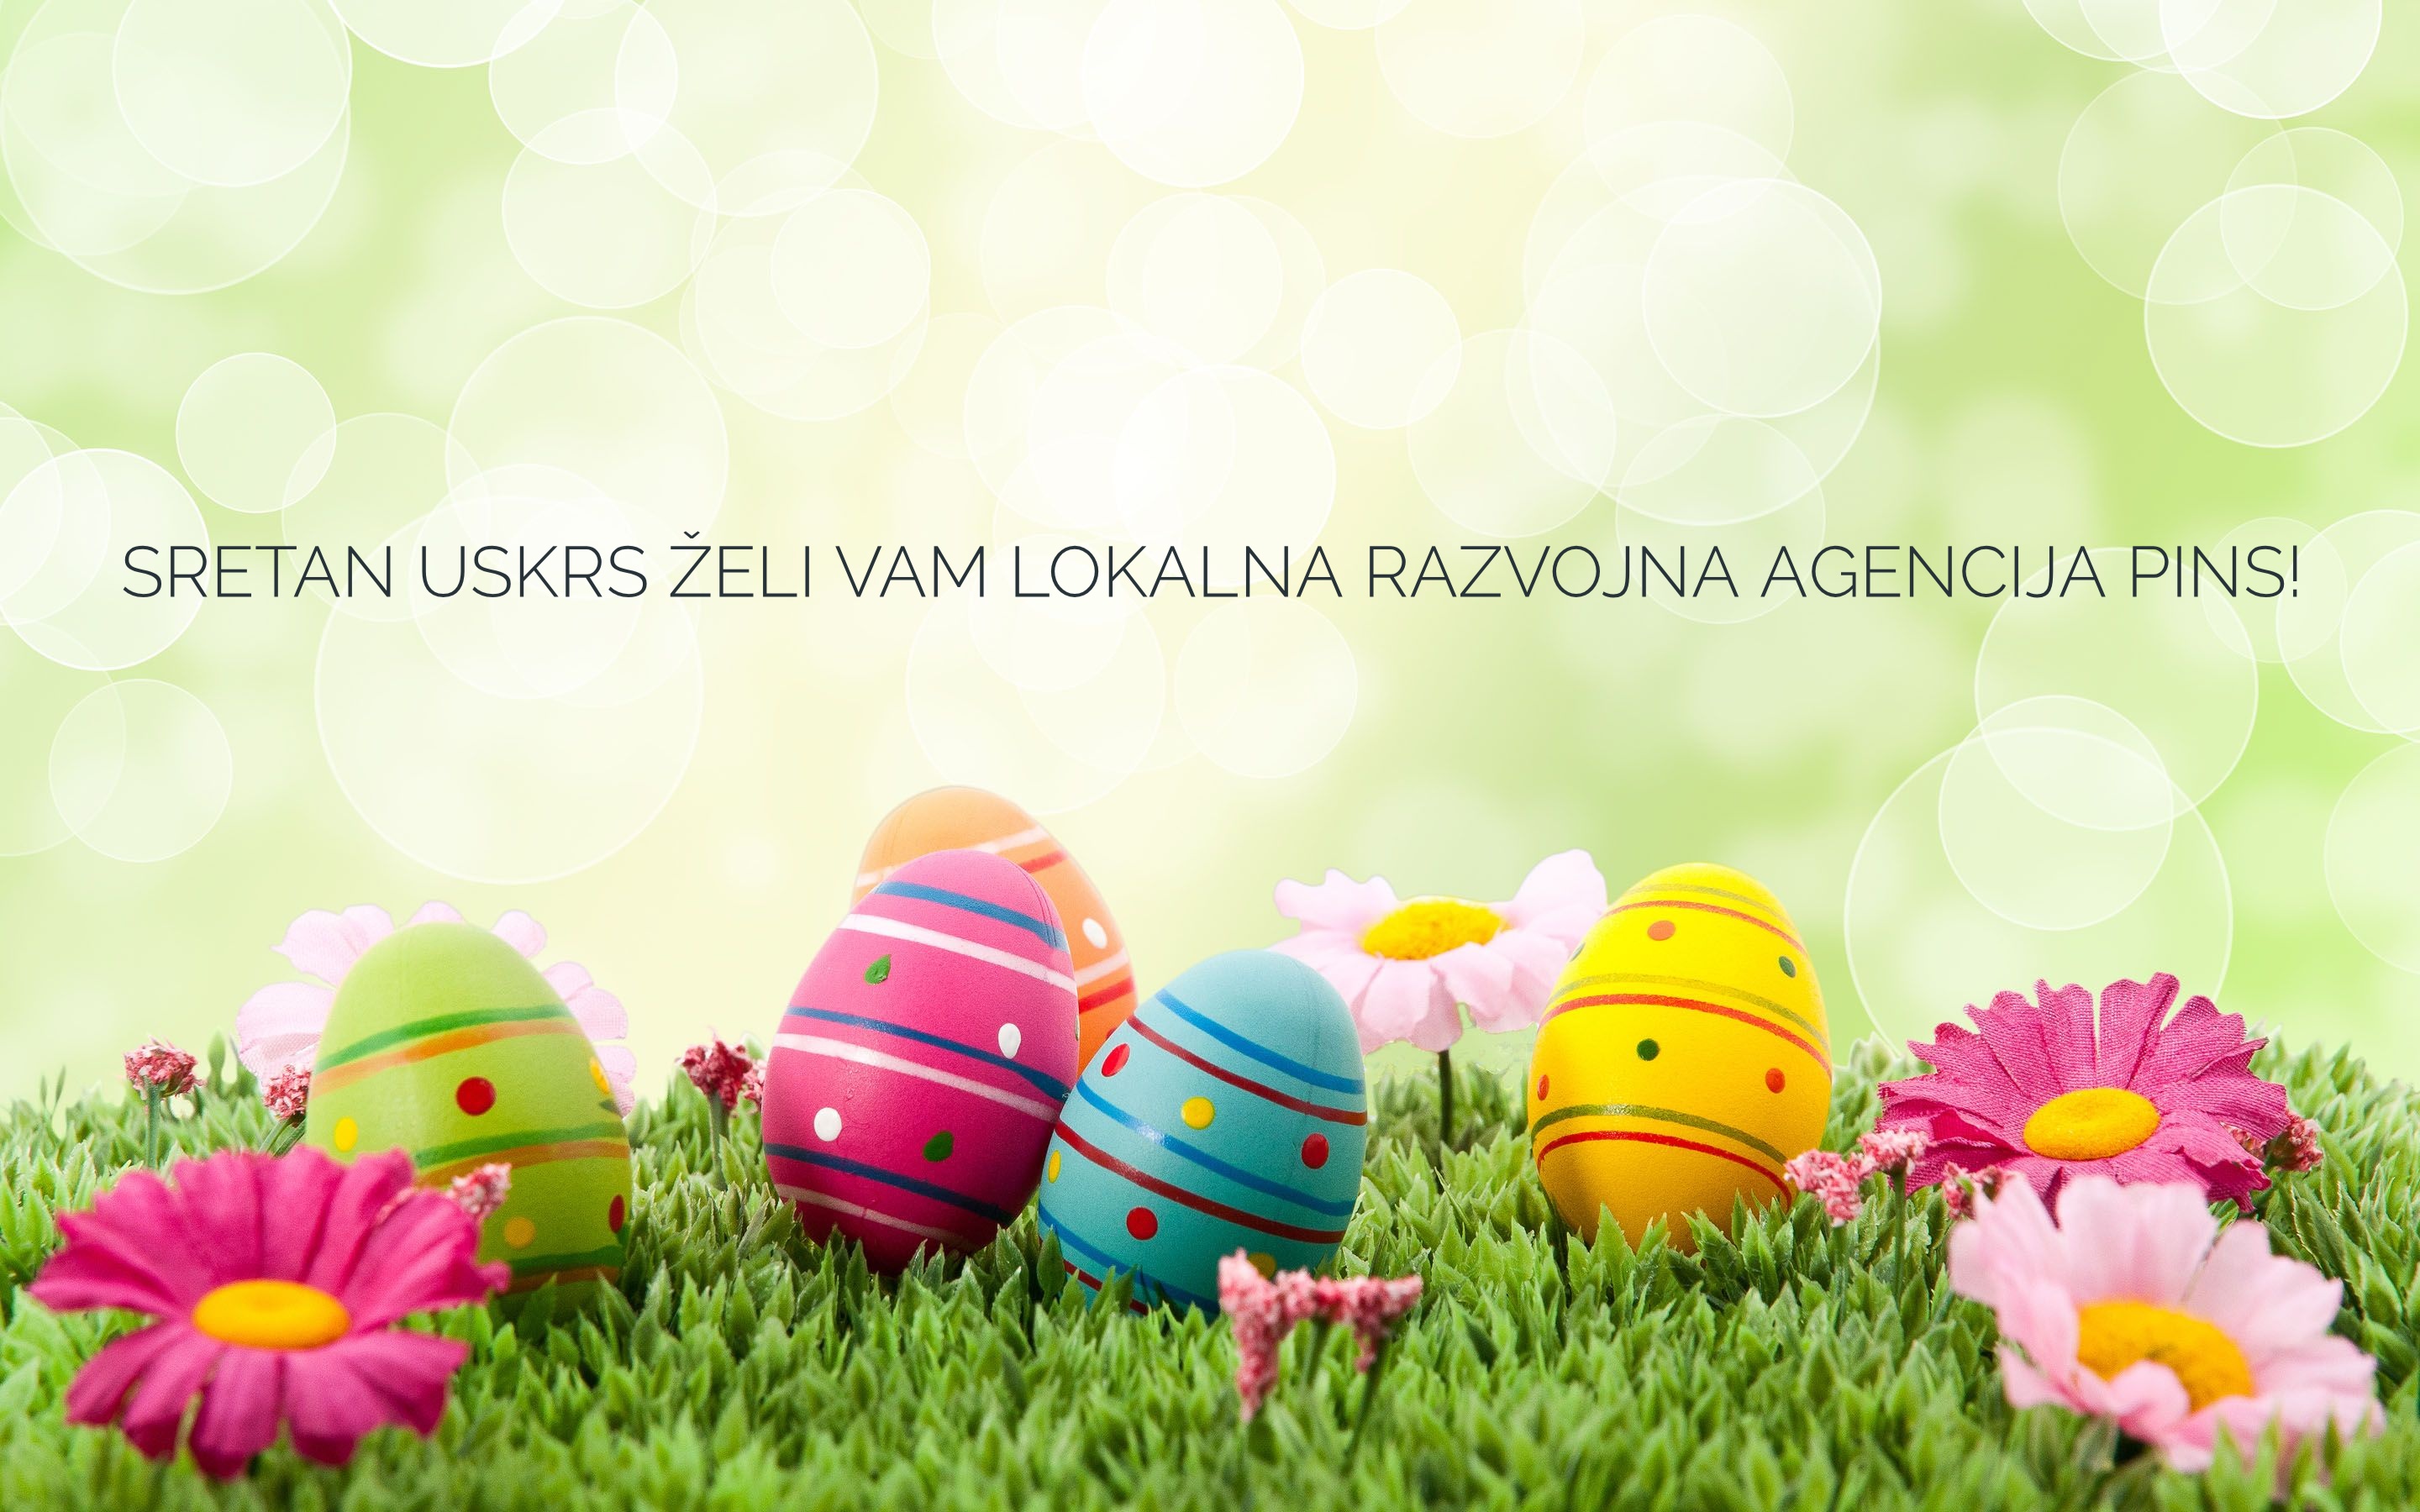 Sretan Uskrs želi vam Lokalna razvojna agencija Pins!